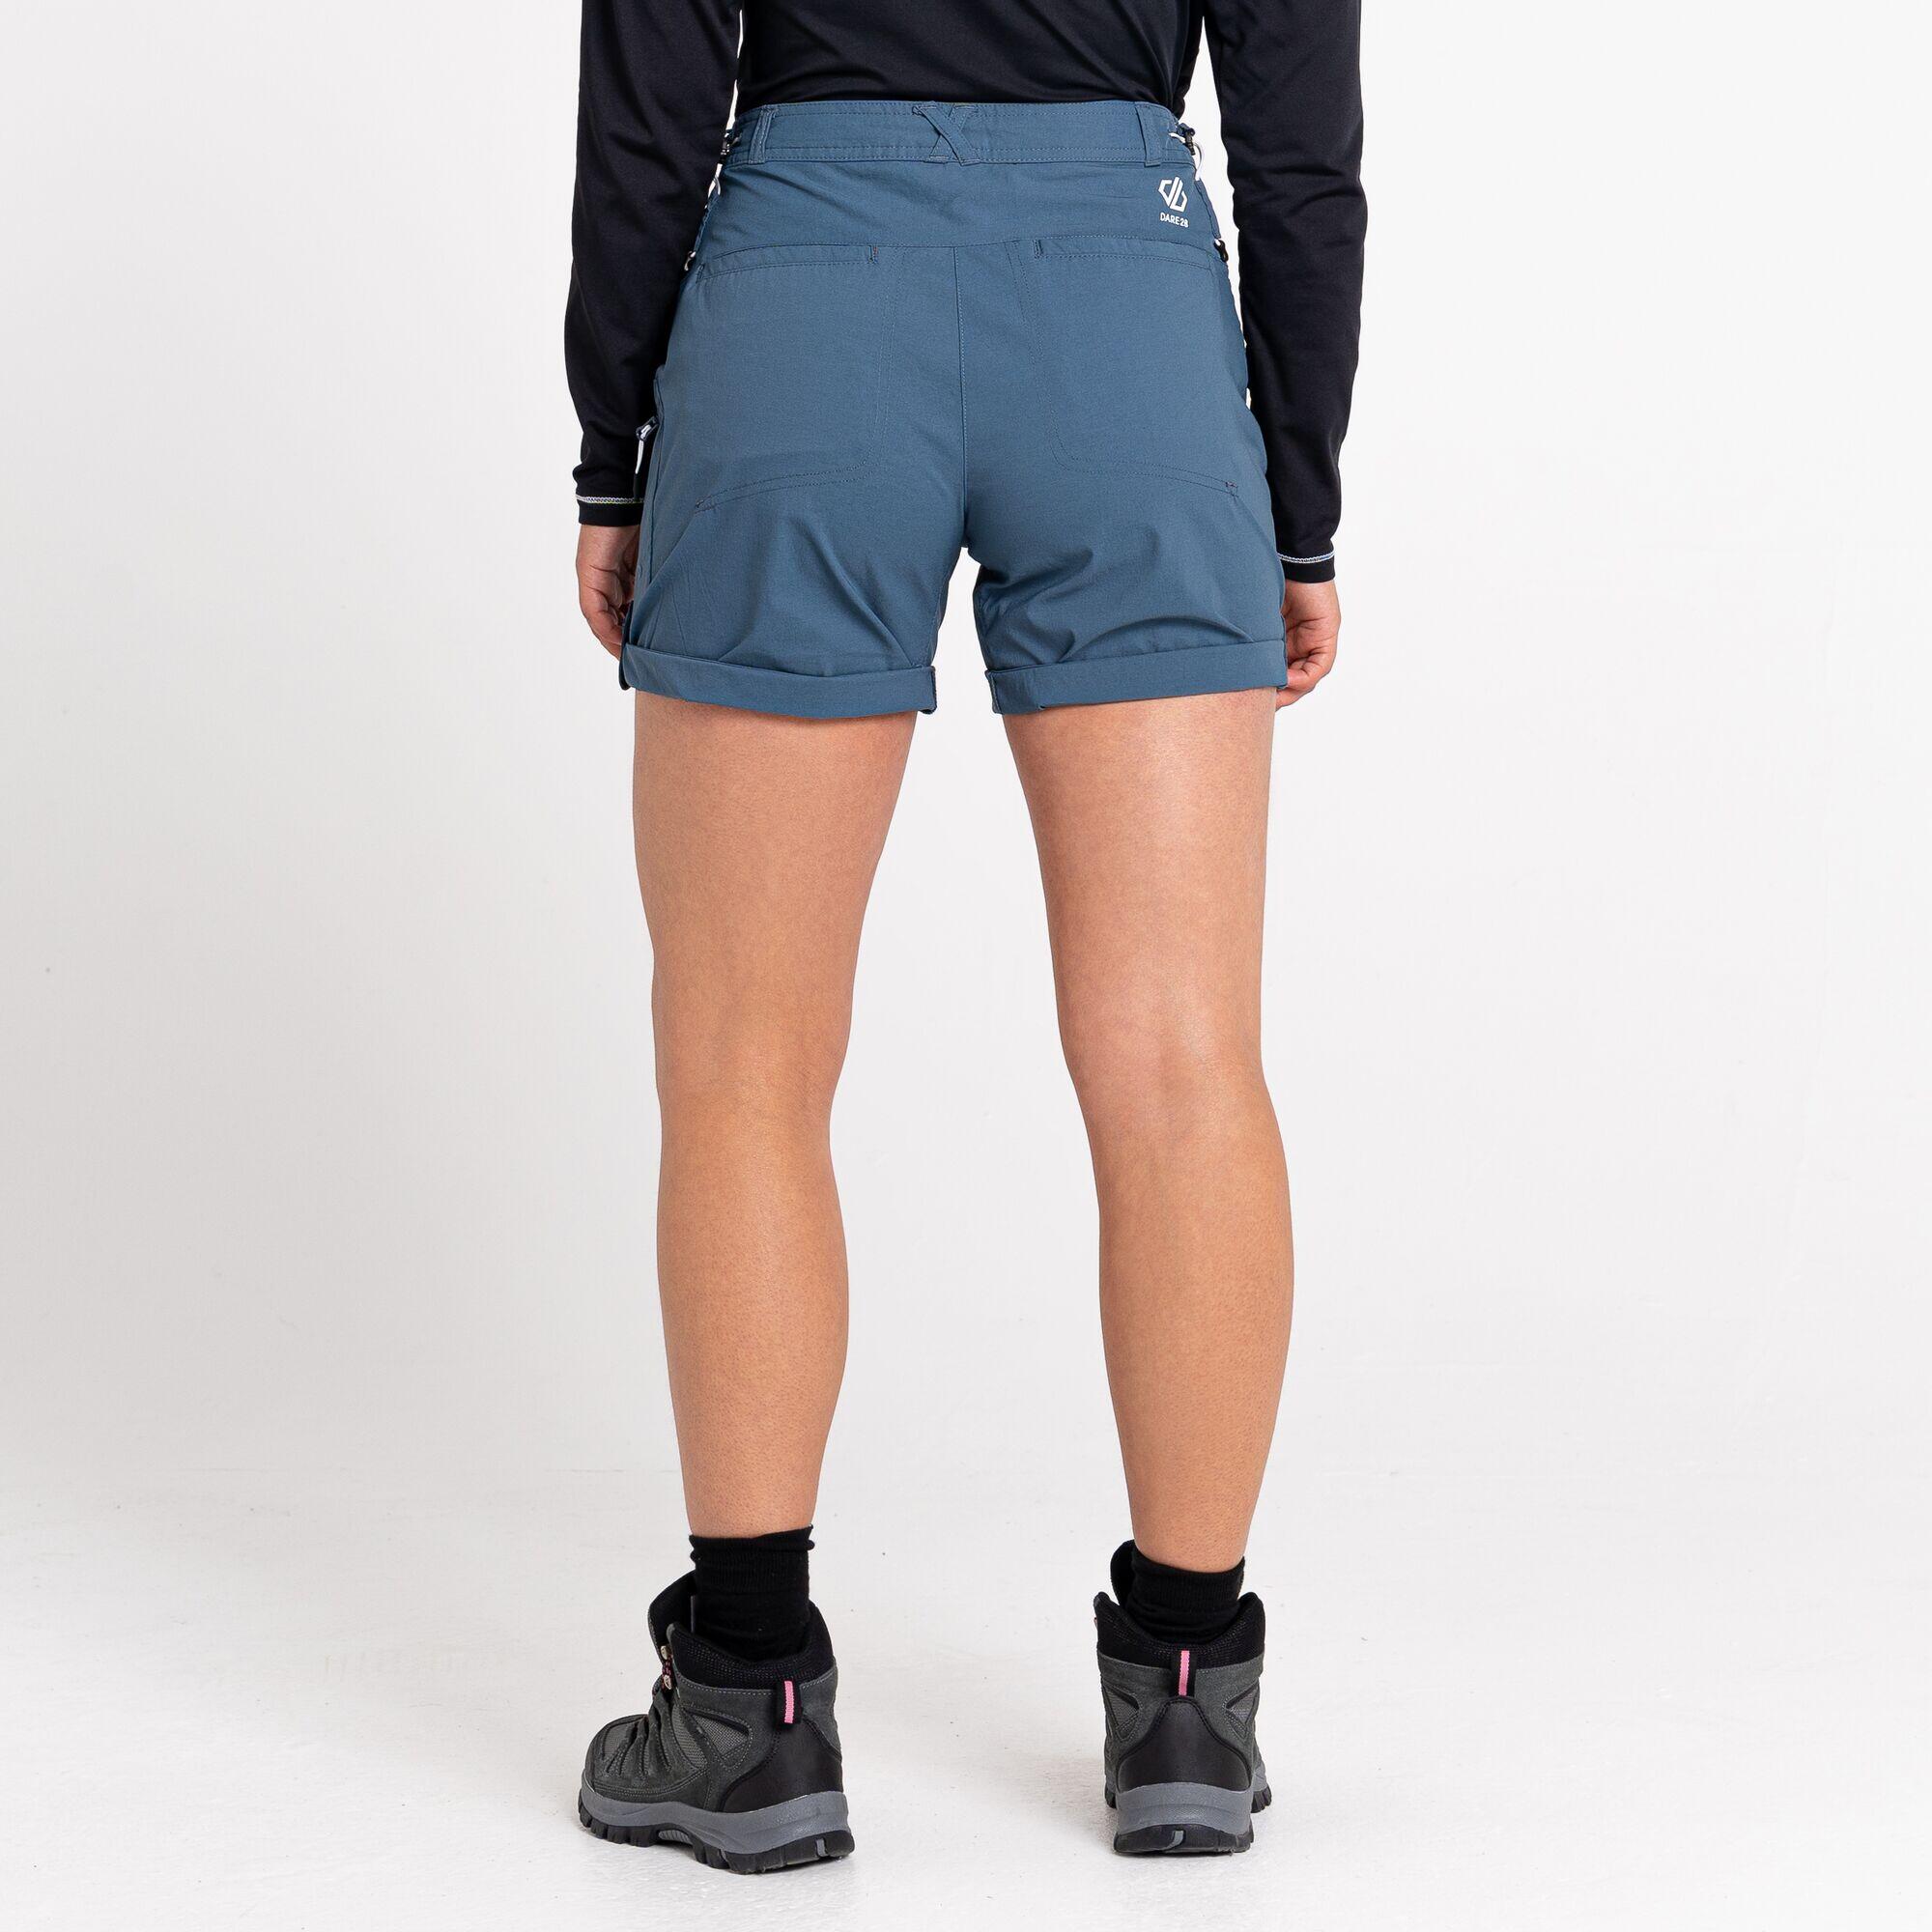 Melodic II Women's Walking Shorts - Blue Orion Grey 3/5